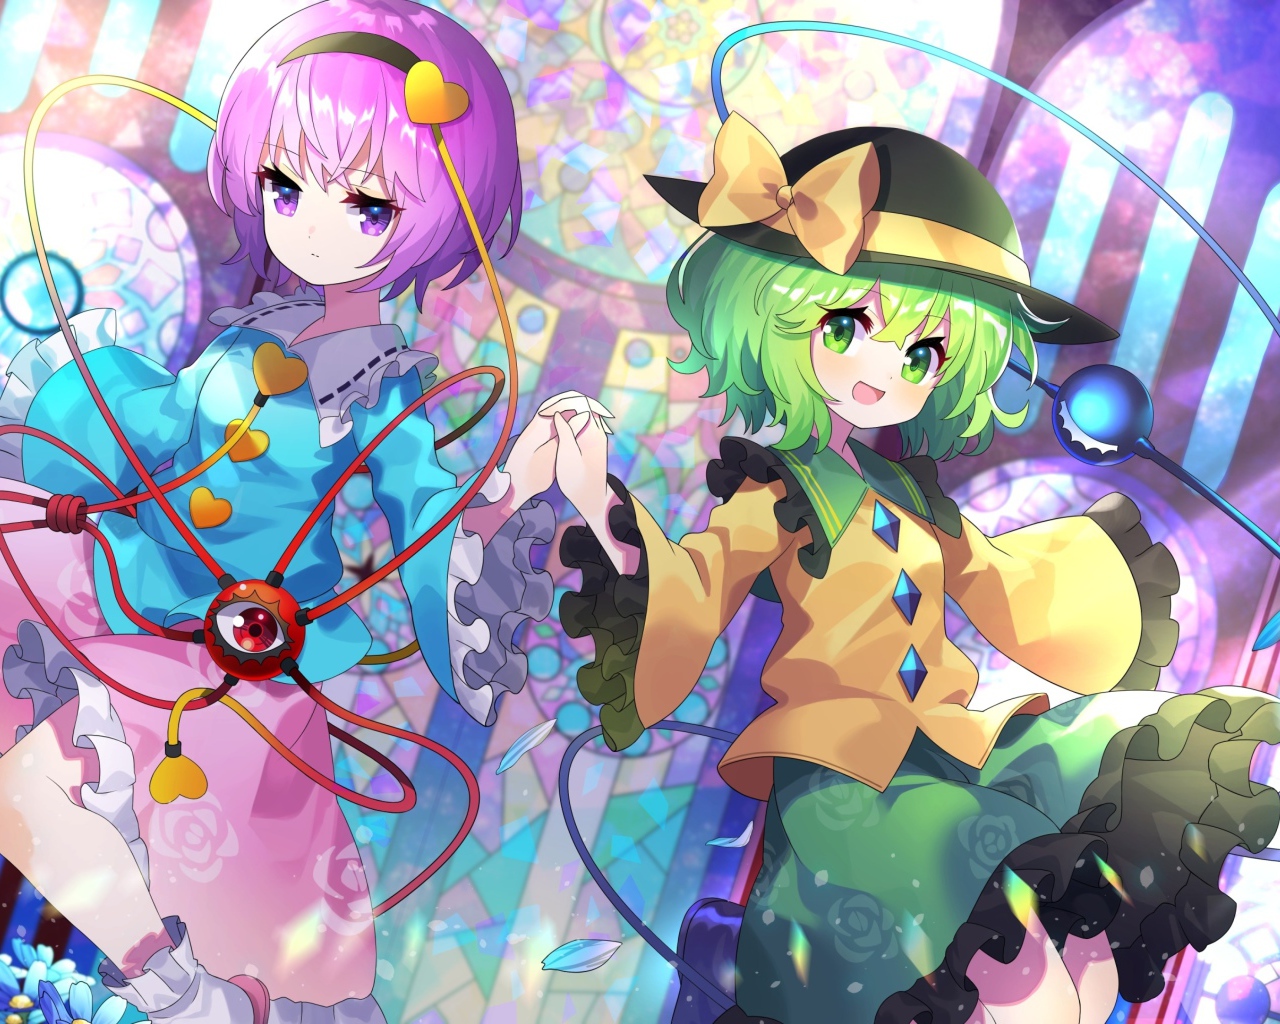 Anime girls Koishi Komeiji and Satori Komeiji in colorful outfits